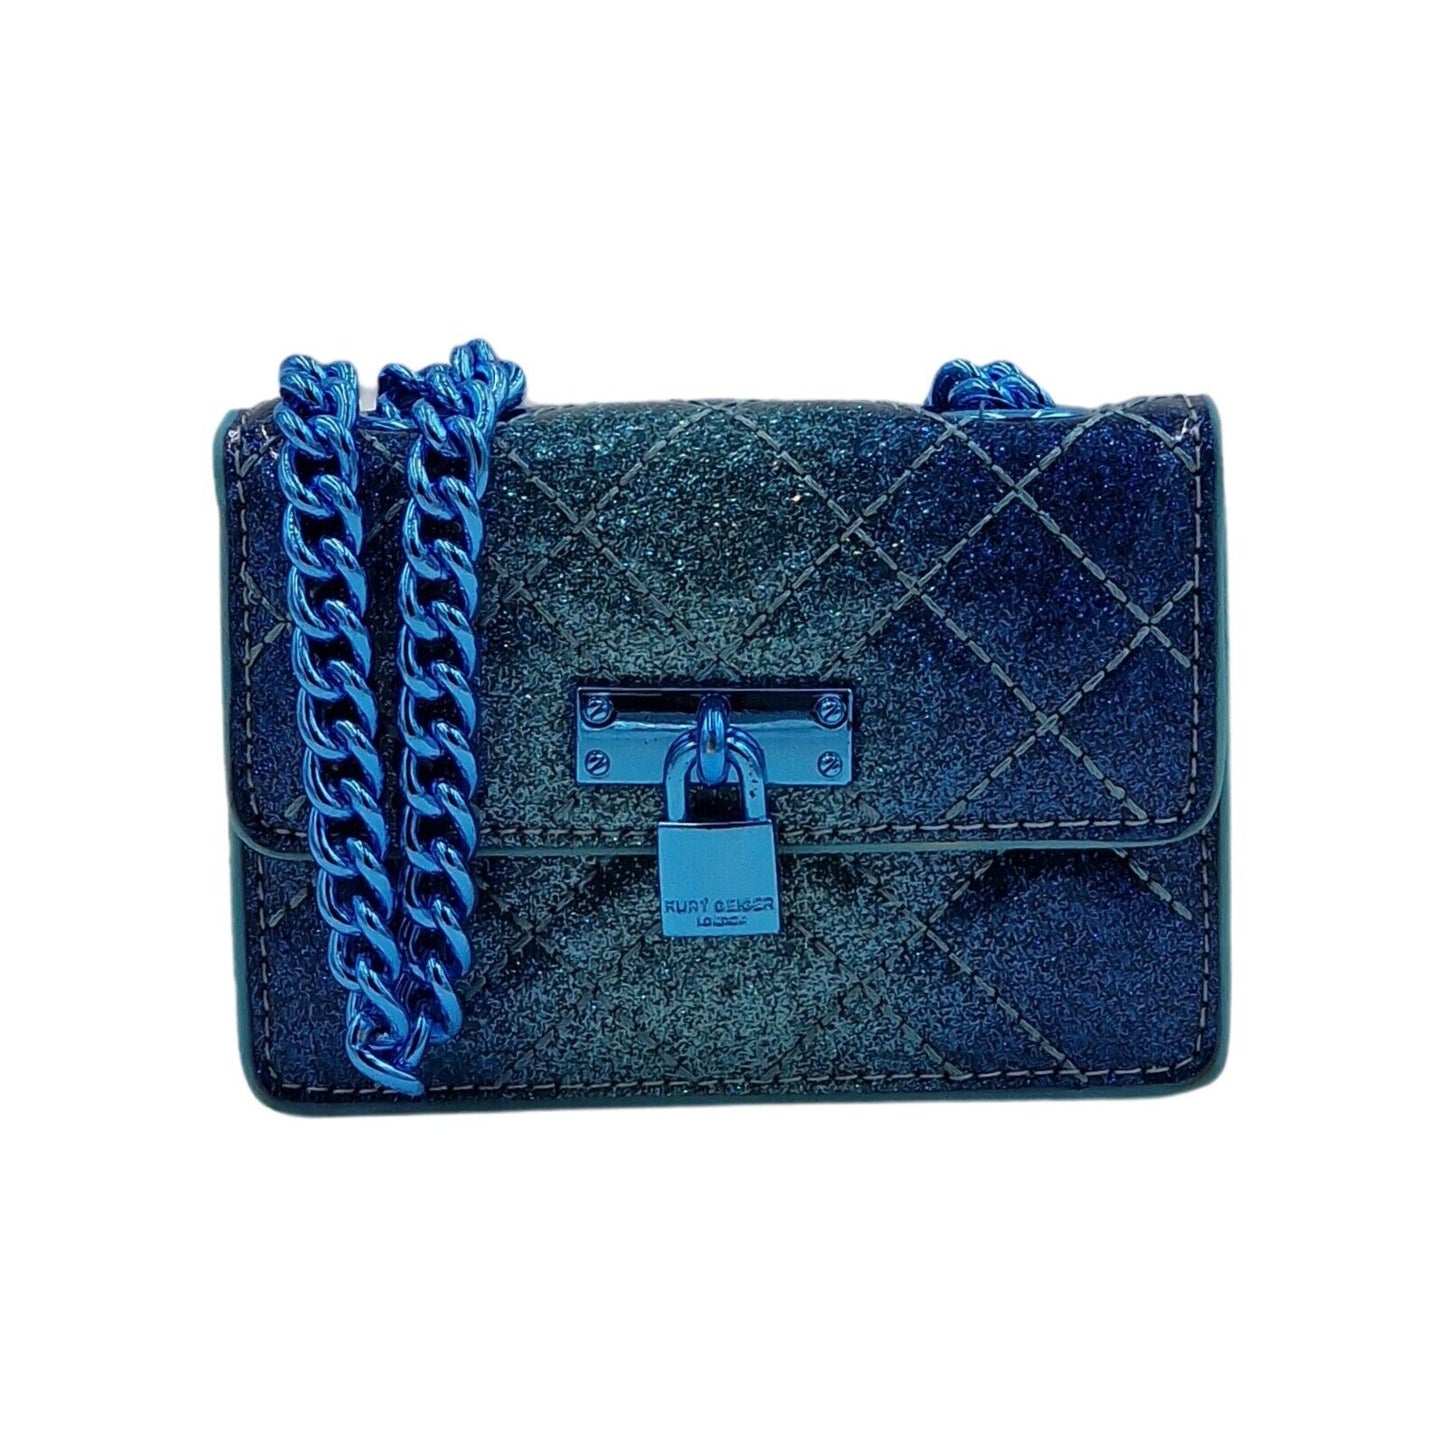 Kurt Geiger London Micro Brixton Crossbody Bag - Blue Glitter